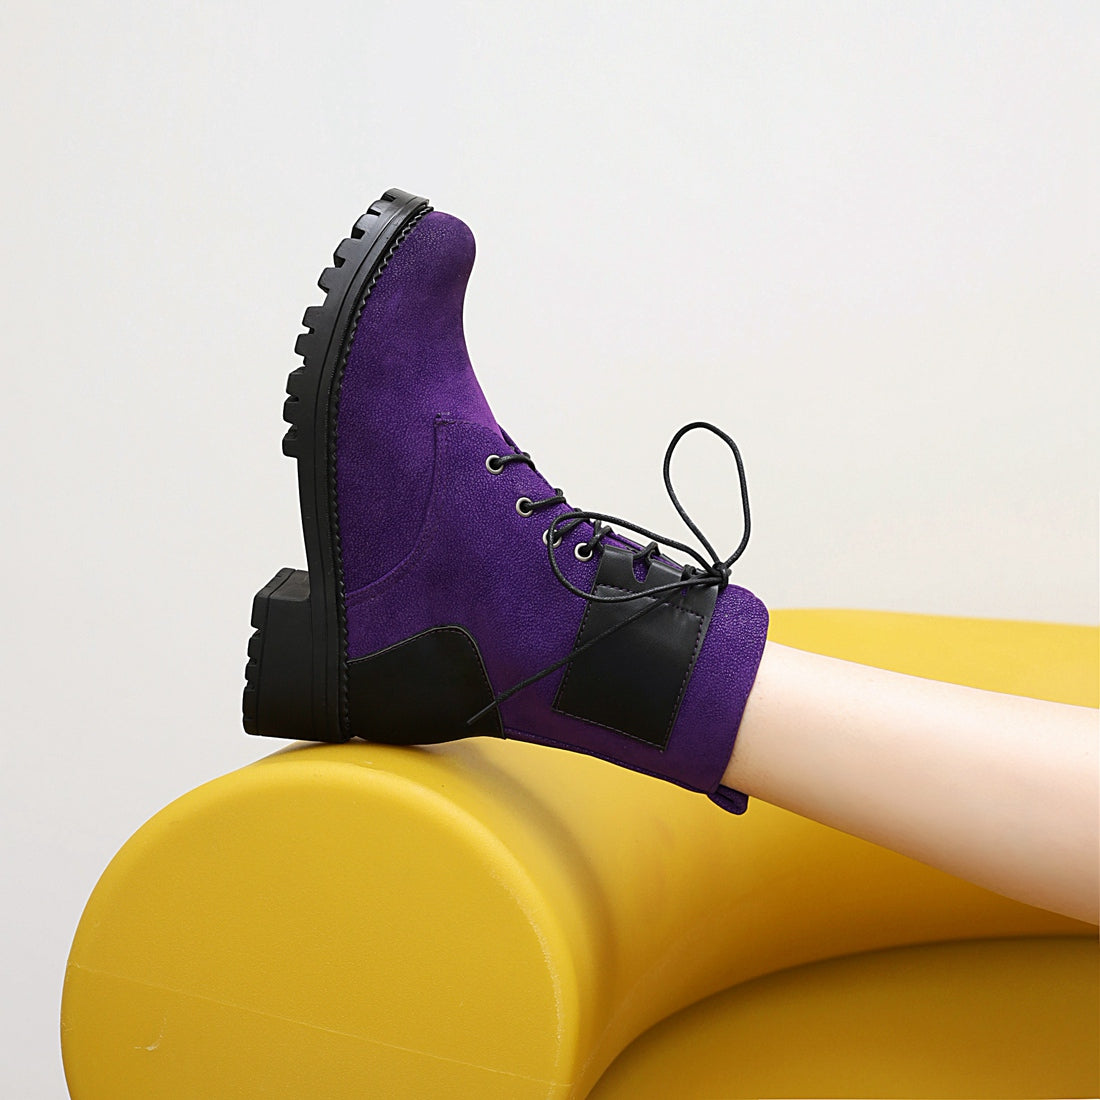 Bigsizeheels Colorblock retro fashion Martin boots - Purple freeshipping - bigsizeheel®-size5-size15 -All Plus Sizes Available!